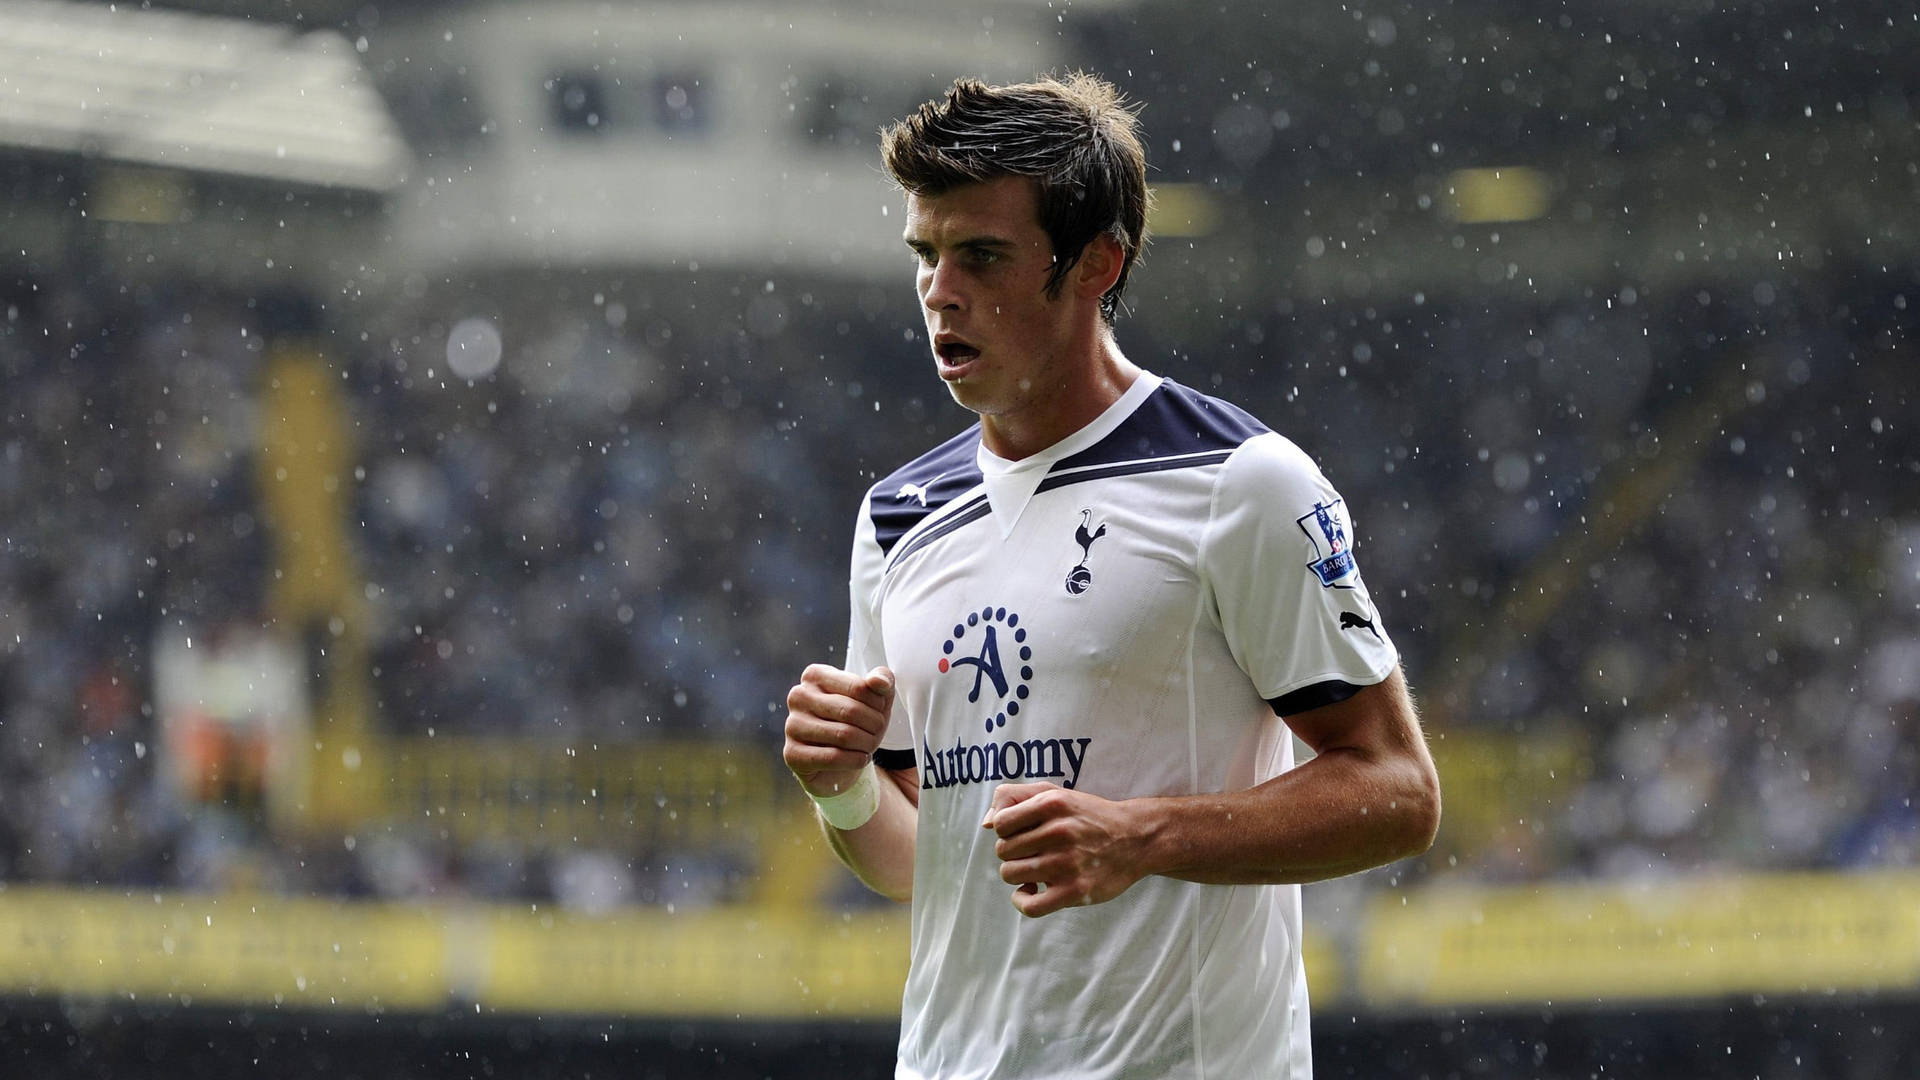 Gareth Bale In Rainy Day